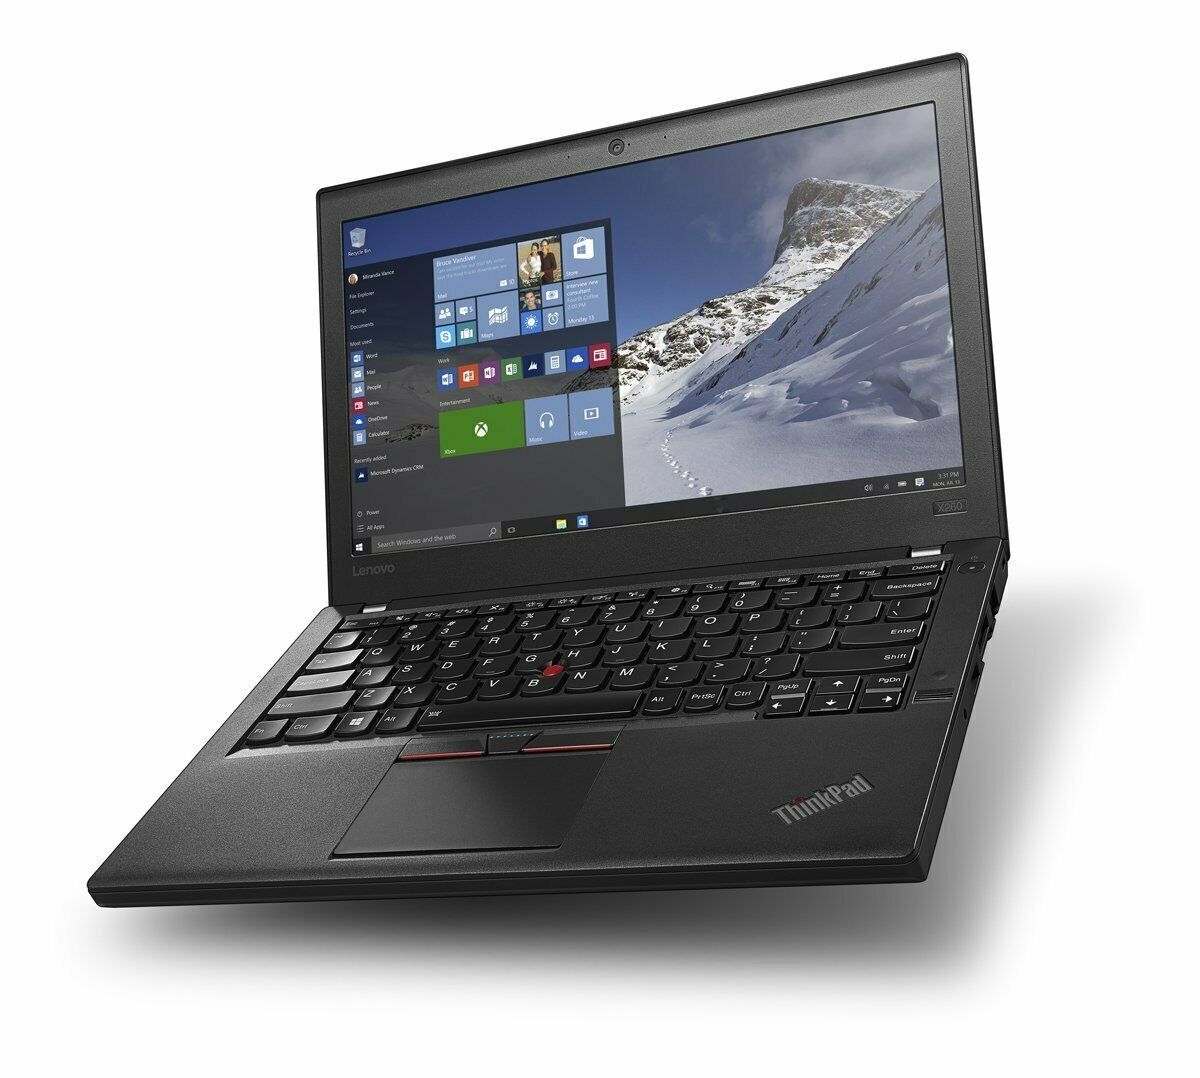 Lenovo ThinkPad X260 i7 6600u 2.40Ghz 8GB RAM 256GB SSD 12.5" HD HDMI Win 10 Pro Image 1